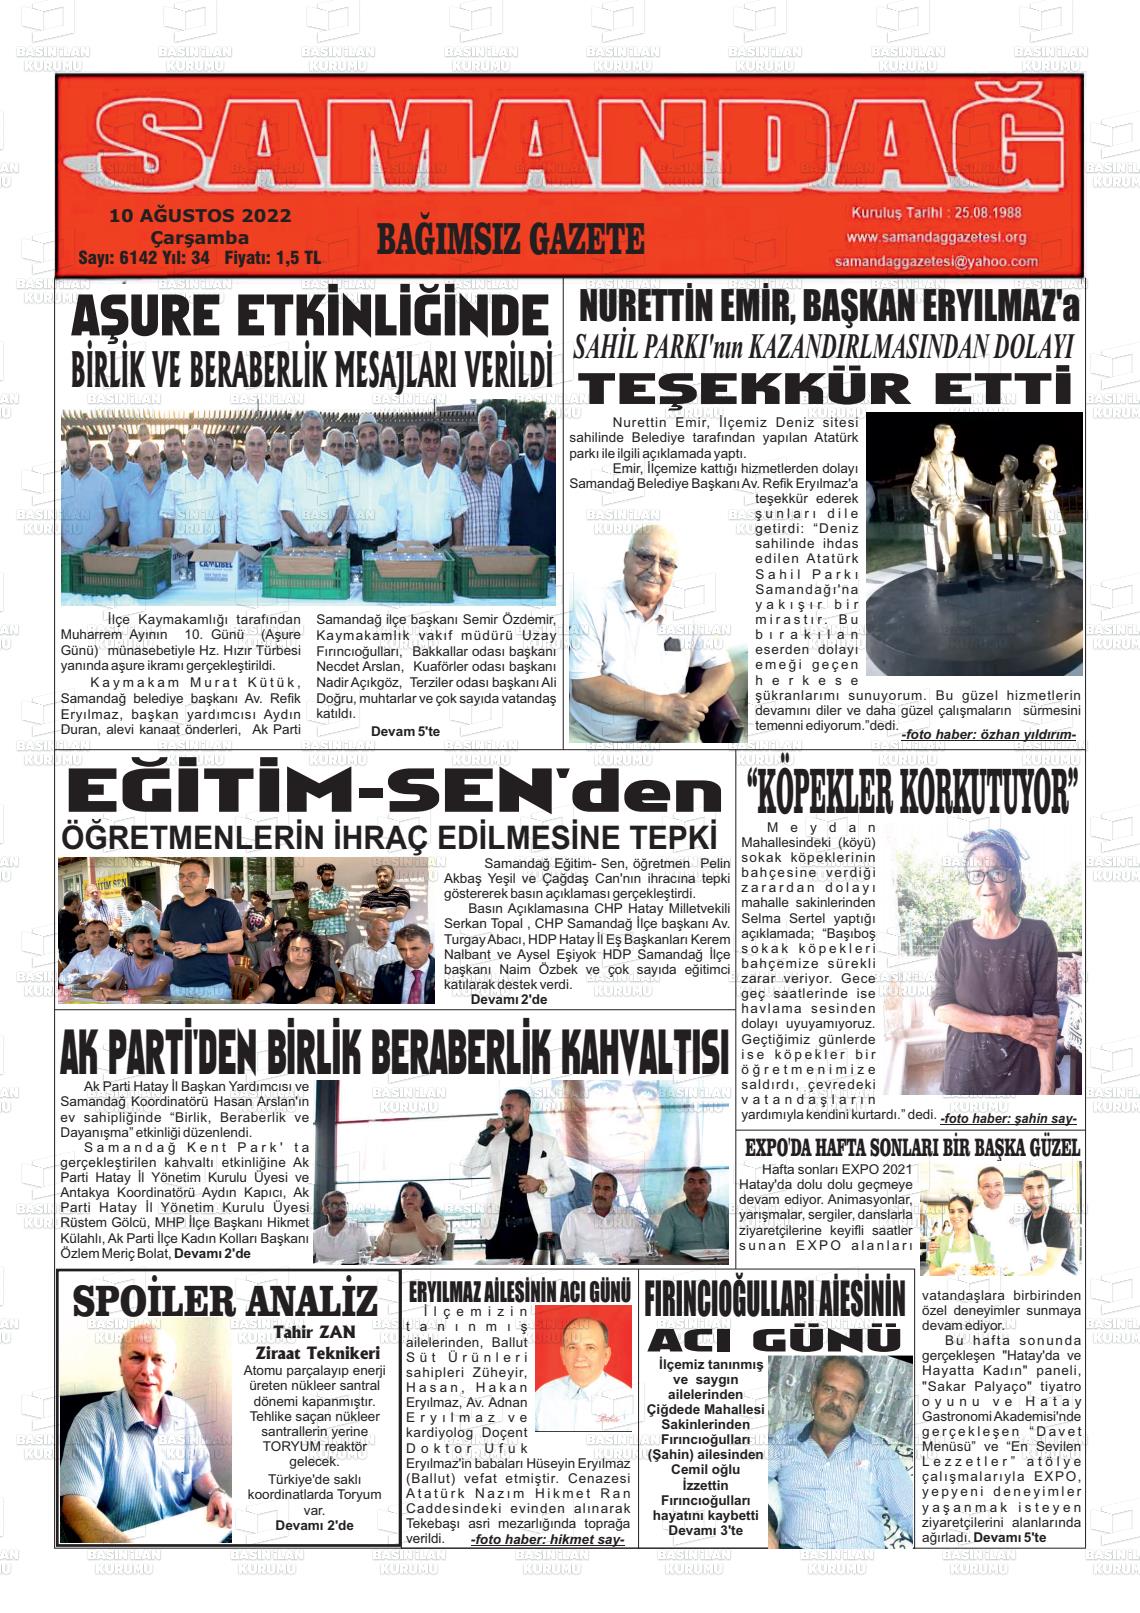 10 Ağustos 2022 Samandağ Gazete Manşeti